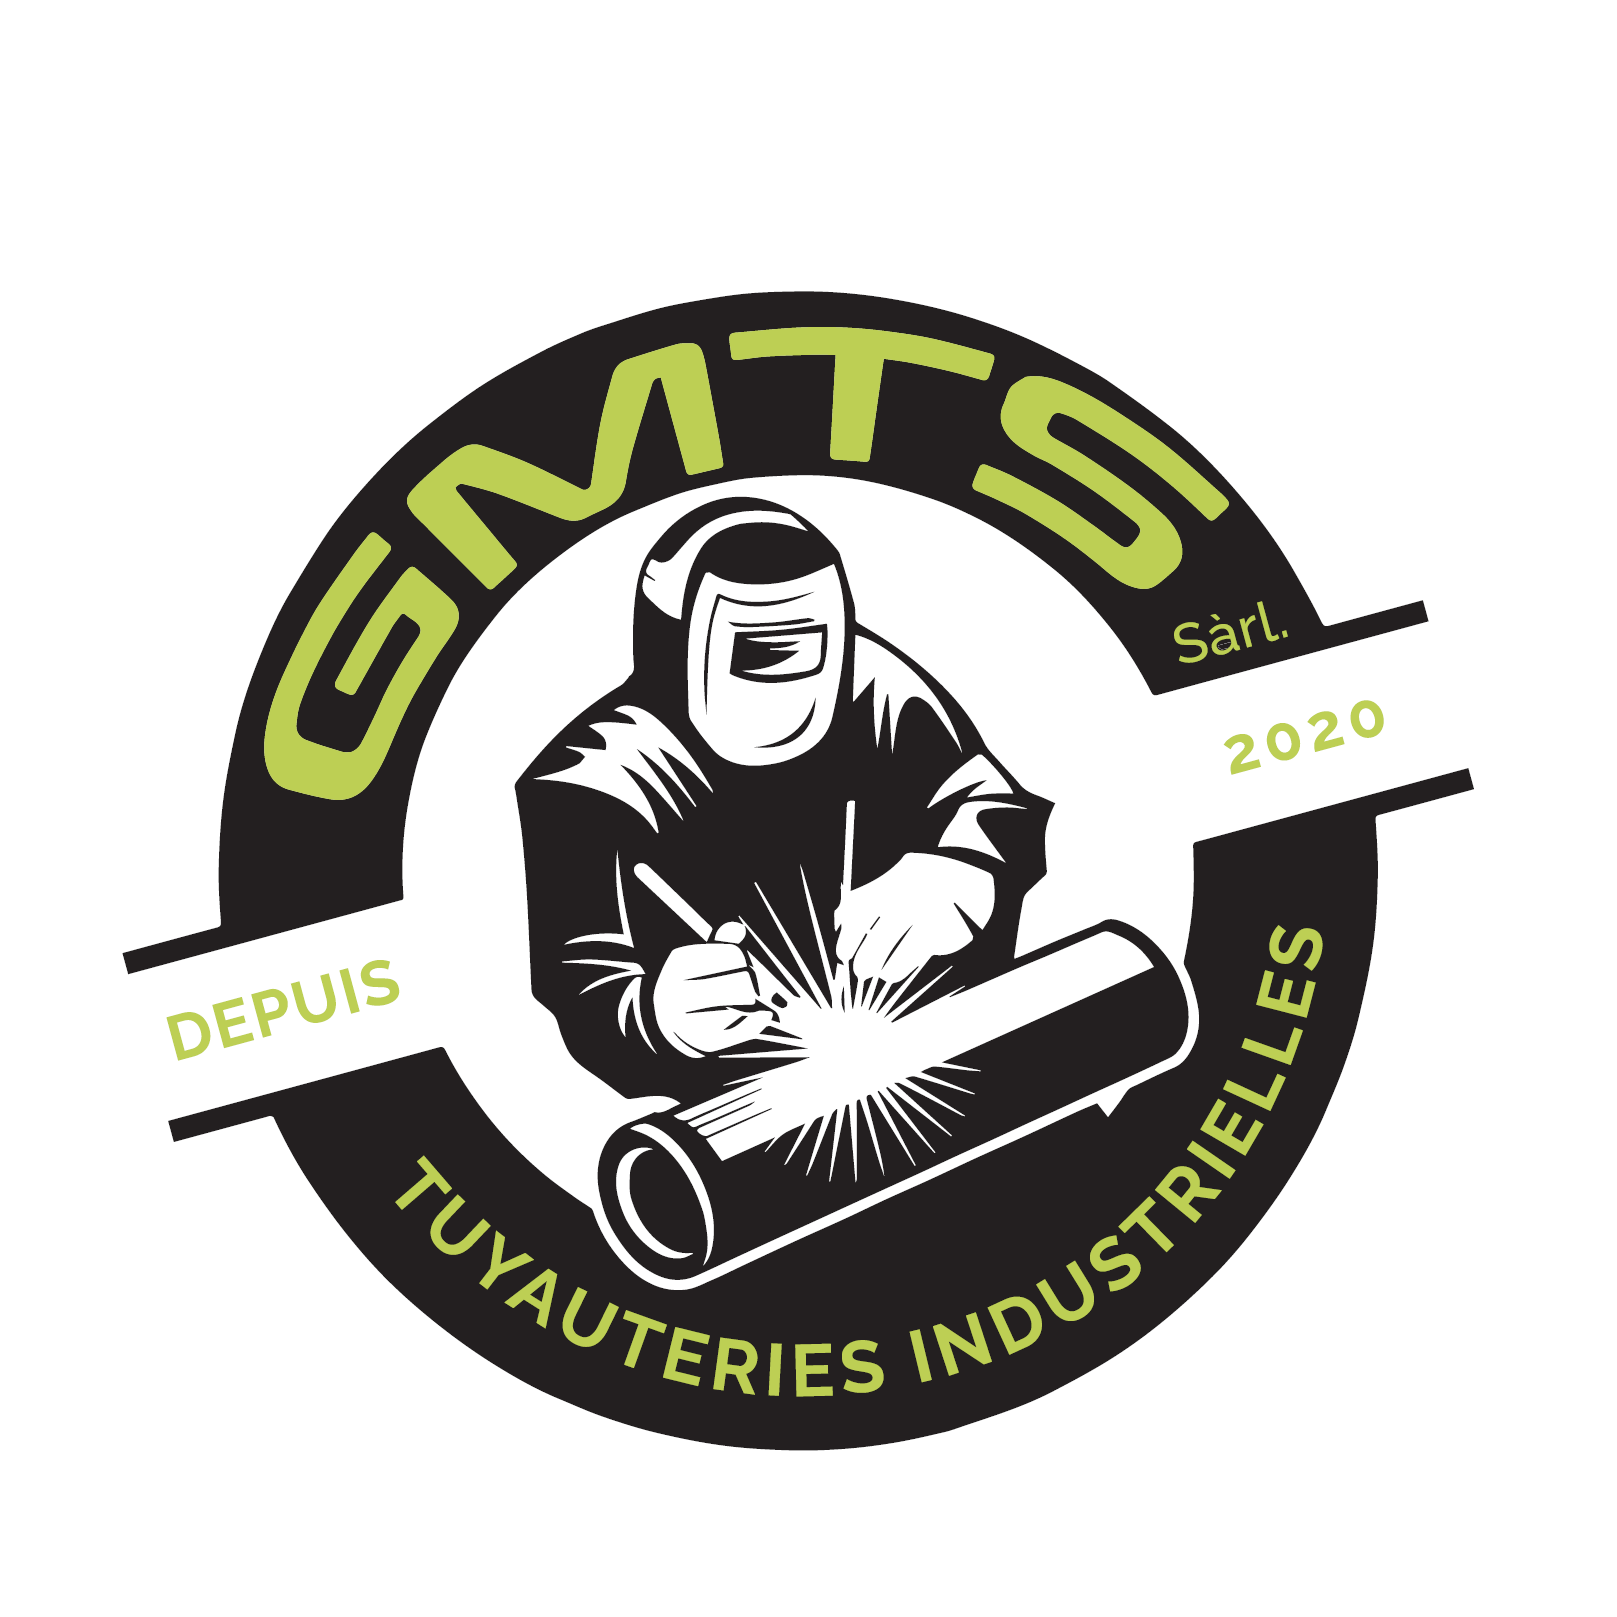 GMTS-Tuyauteries industrielles Logo